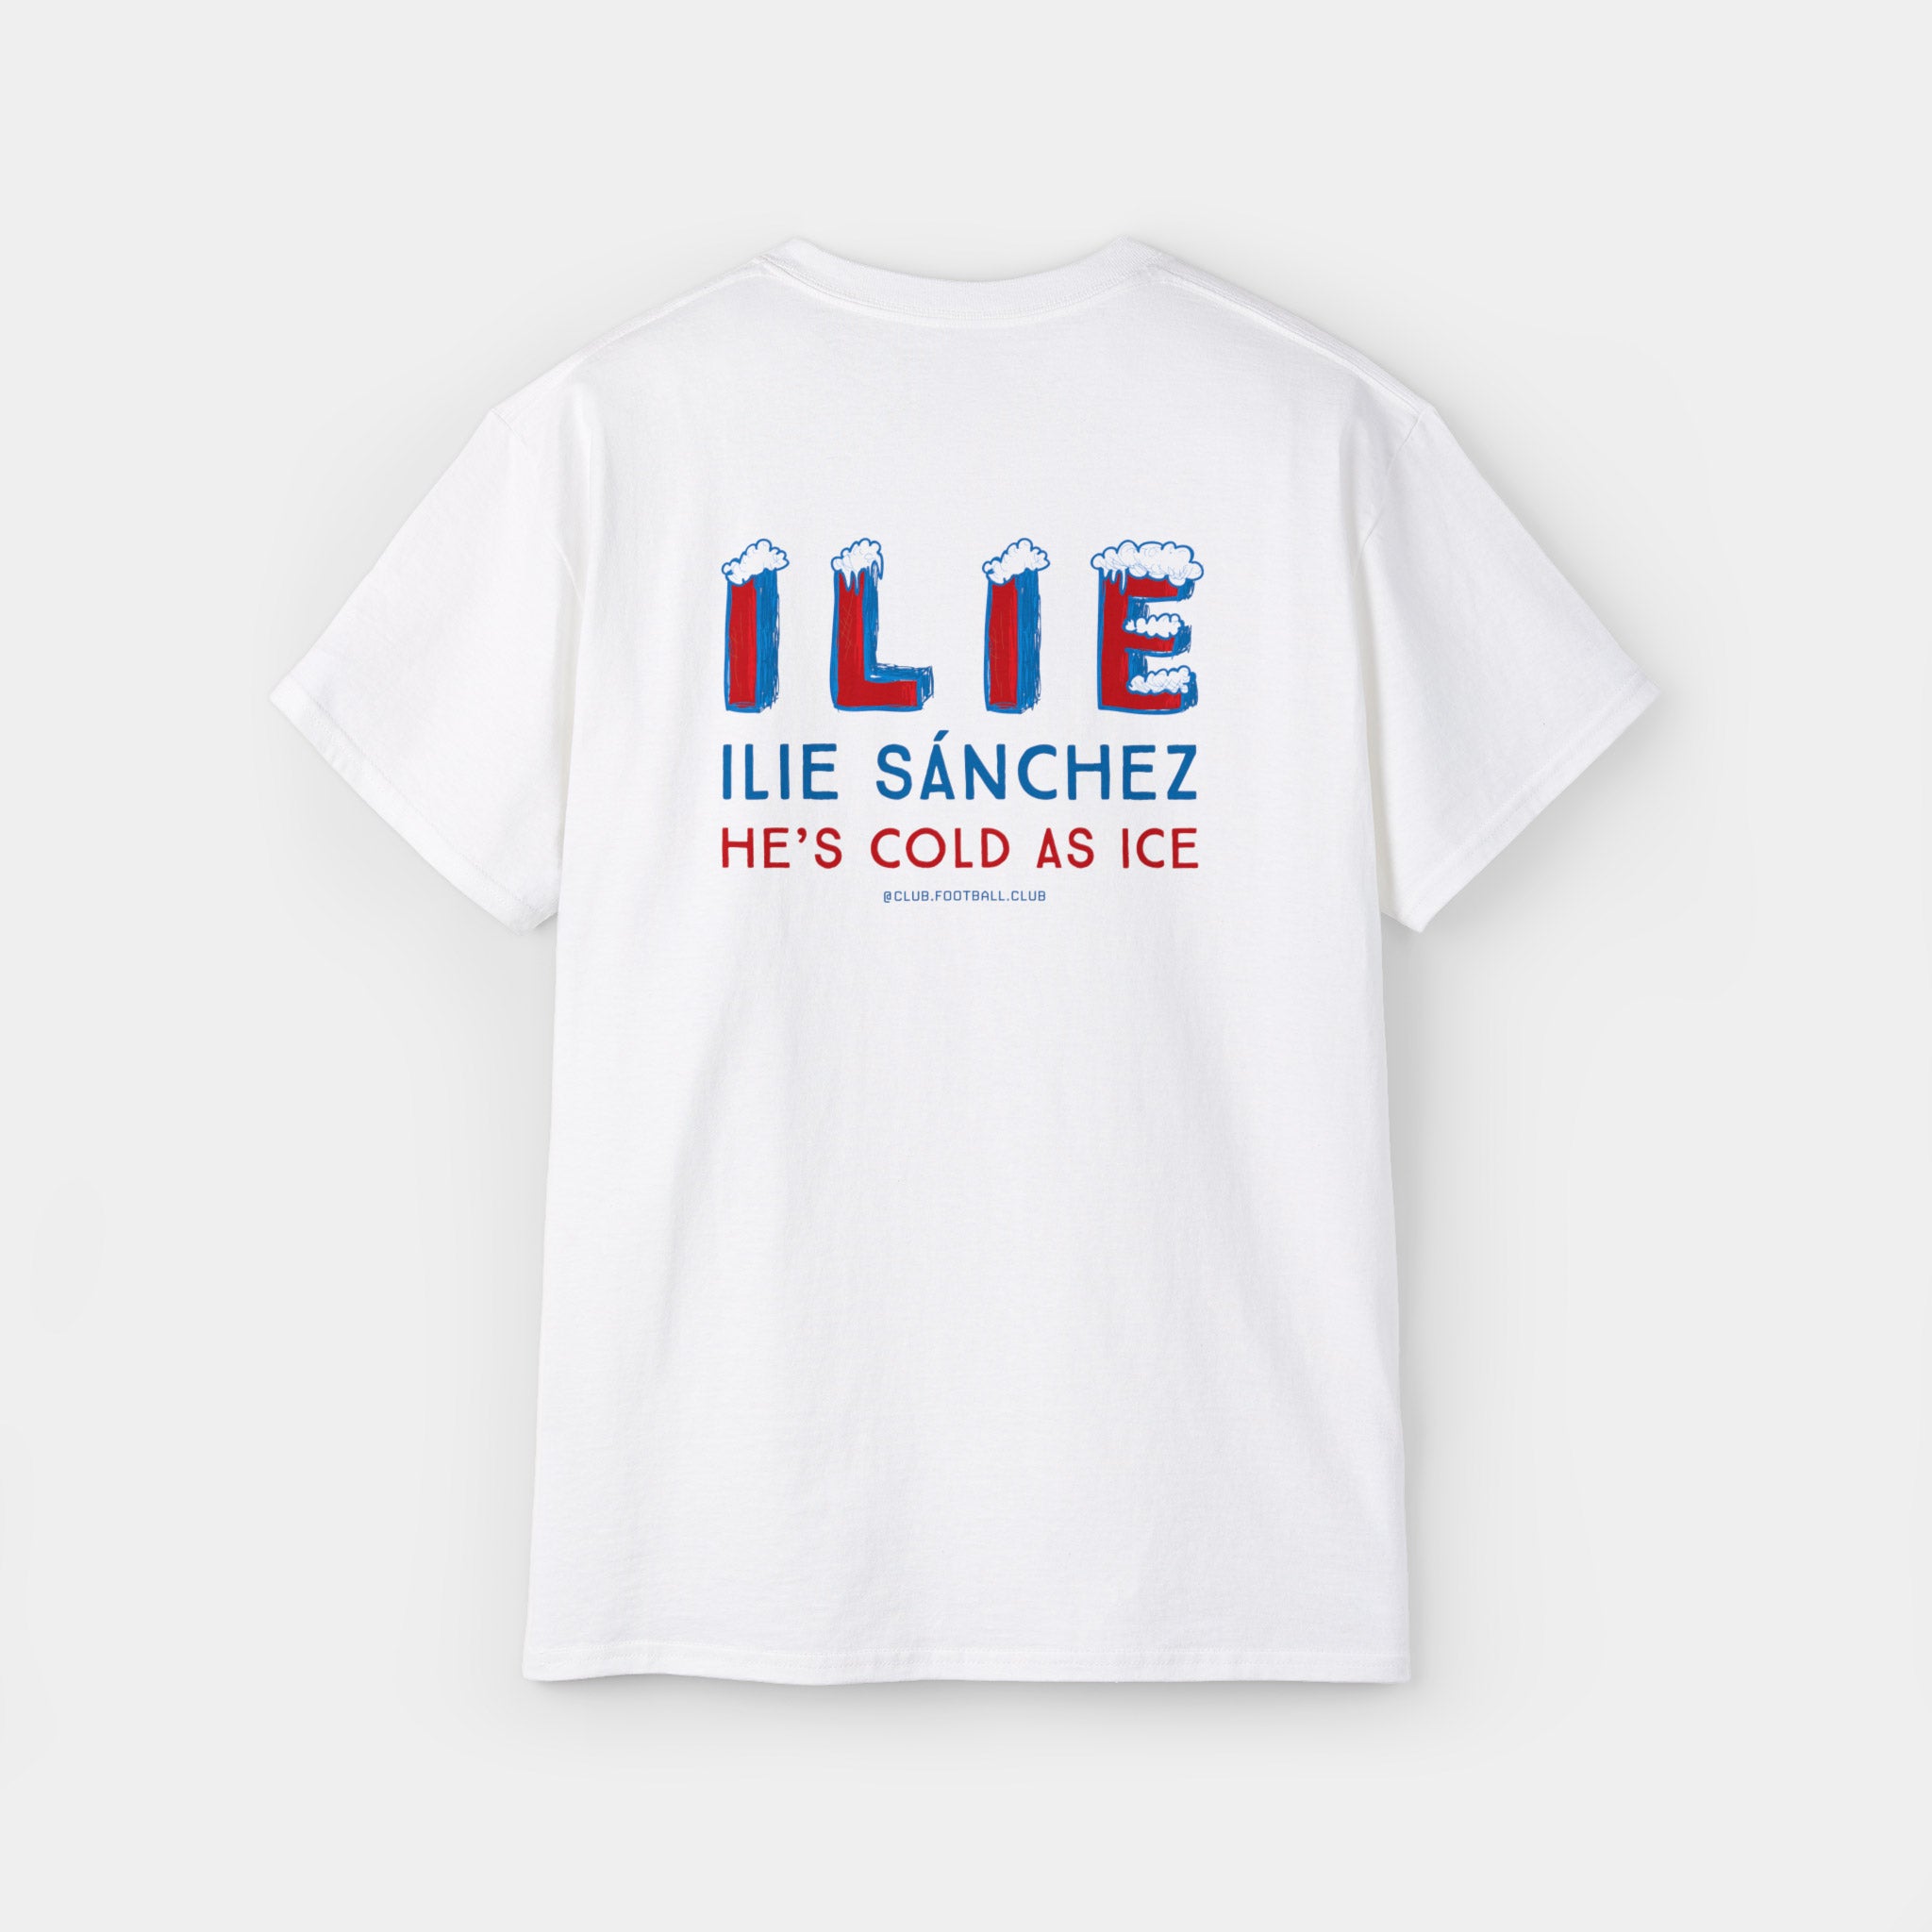 Ilie Sánchez, Cold As Ice (LAFC) T-shirt